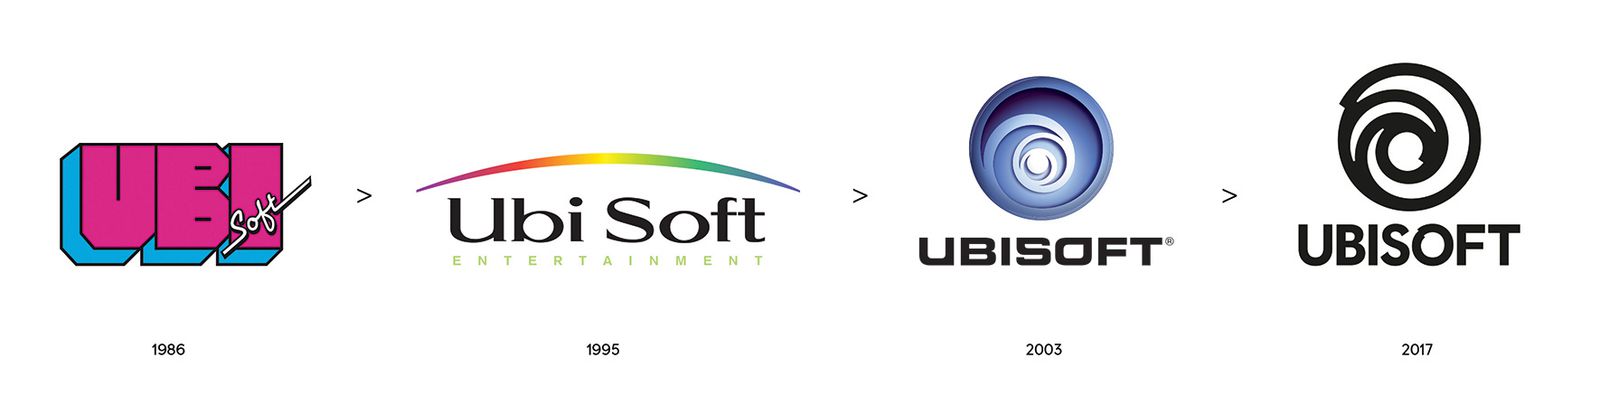 Ubisoft Logo Evolution